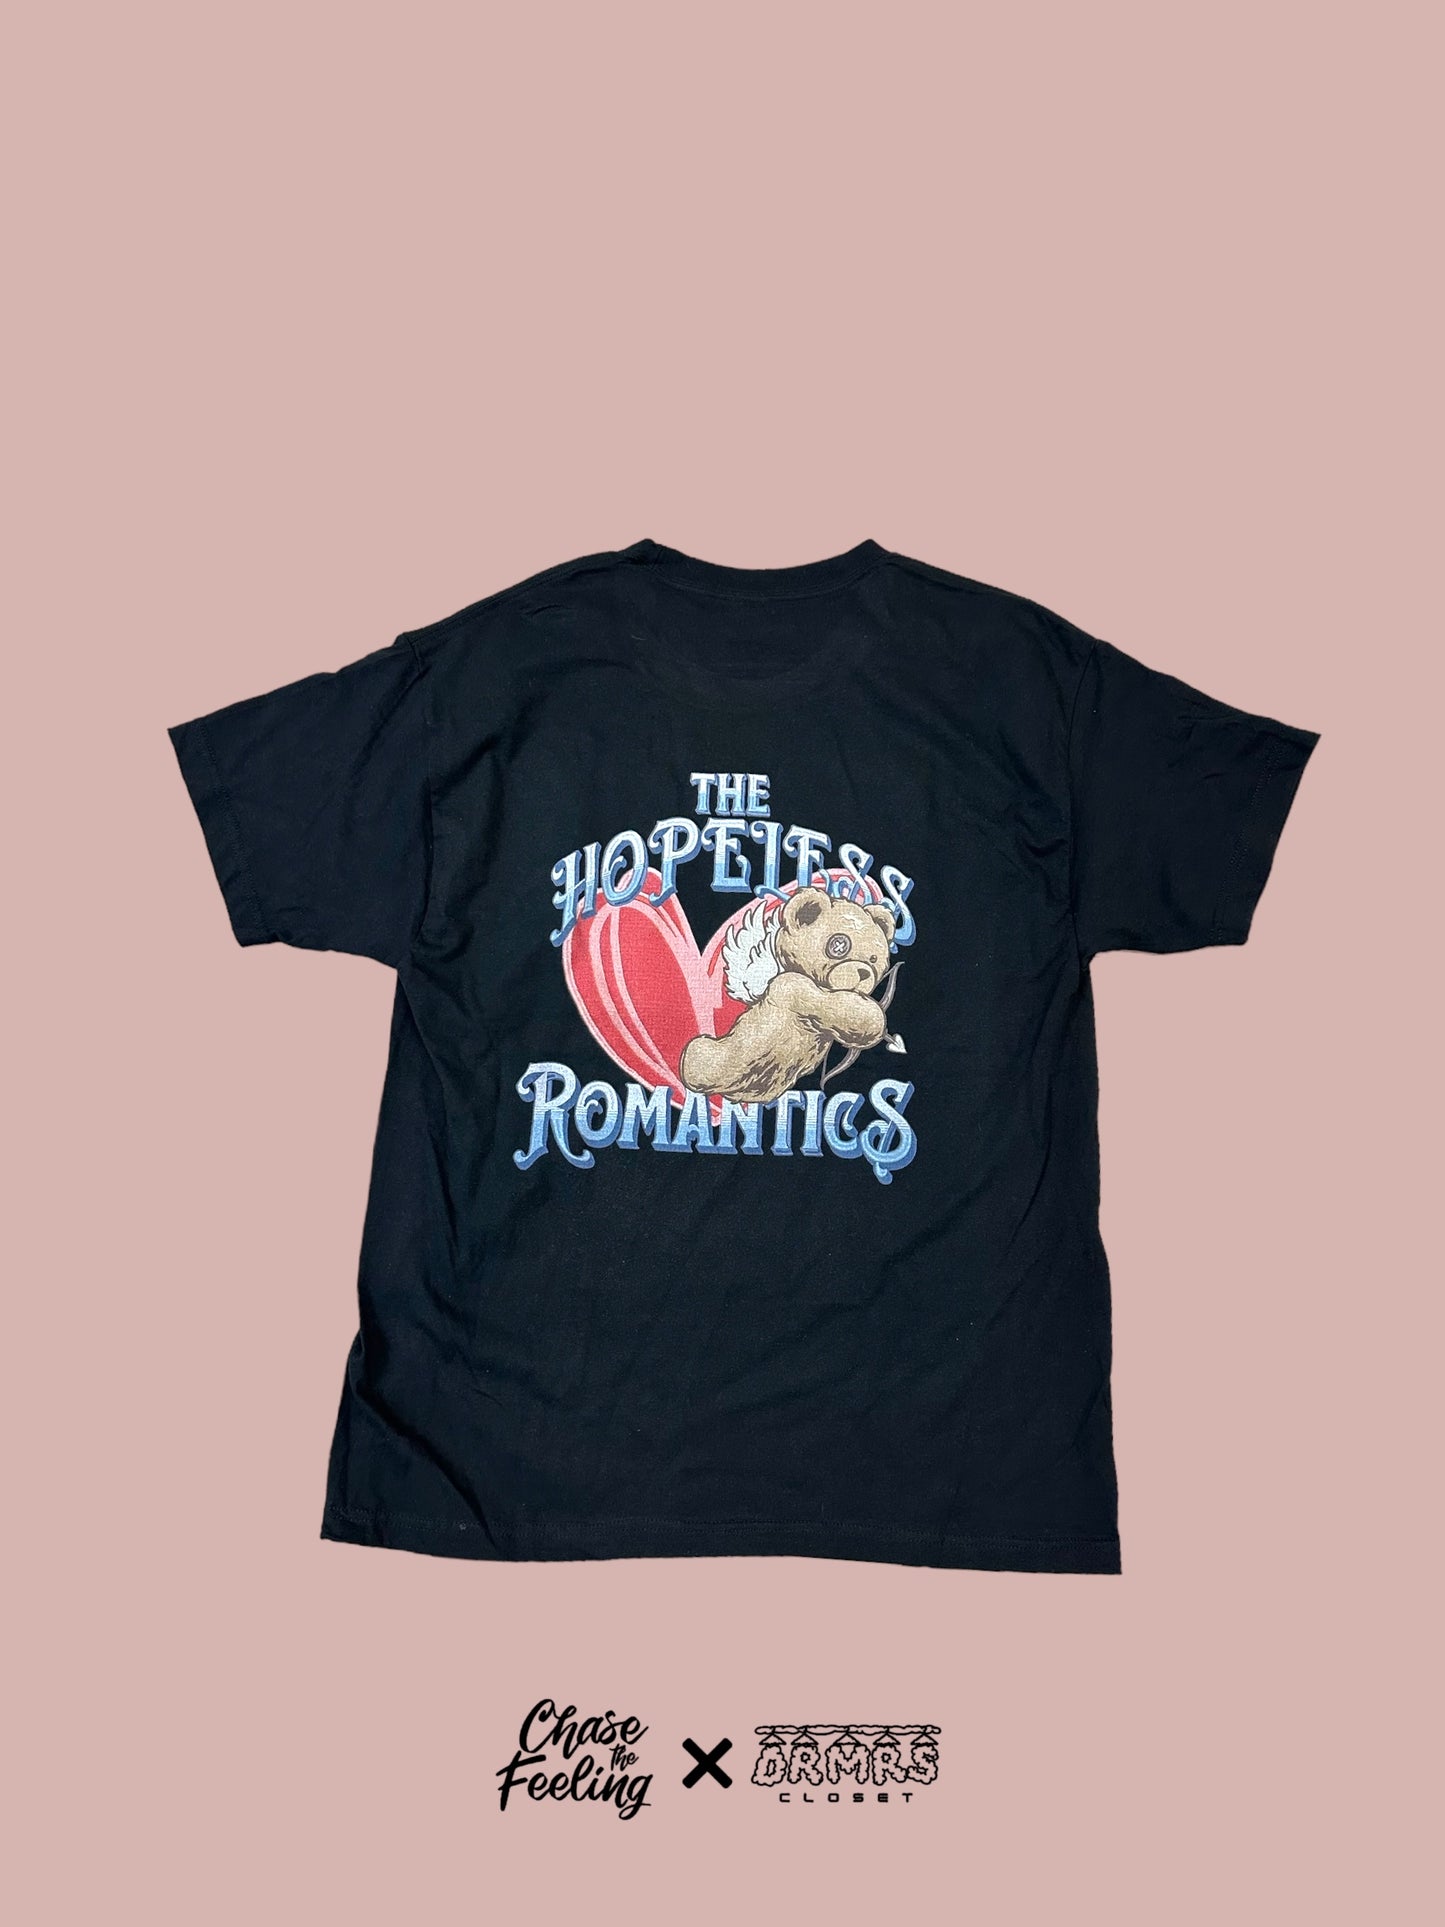 The Hopeless Romantic$ Tee (Black)